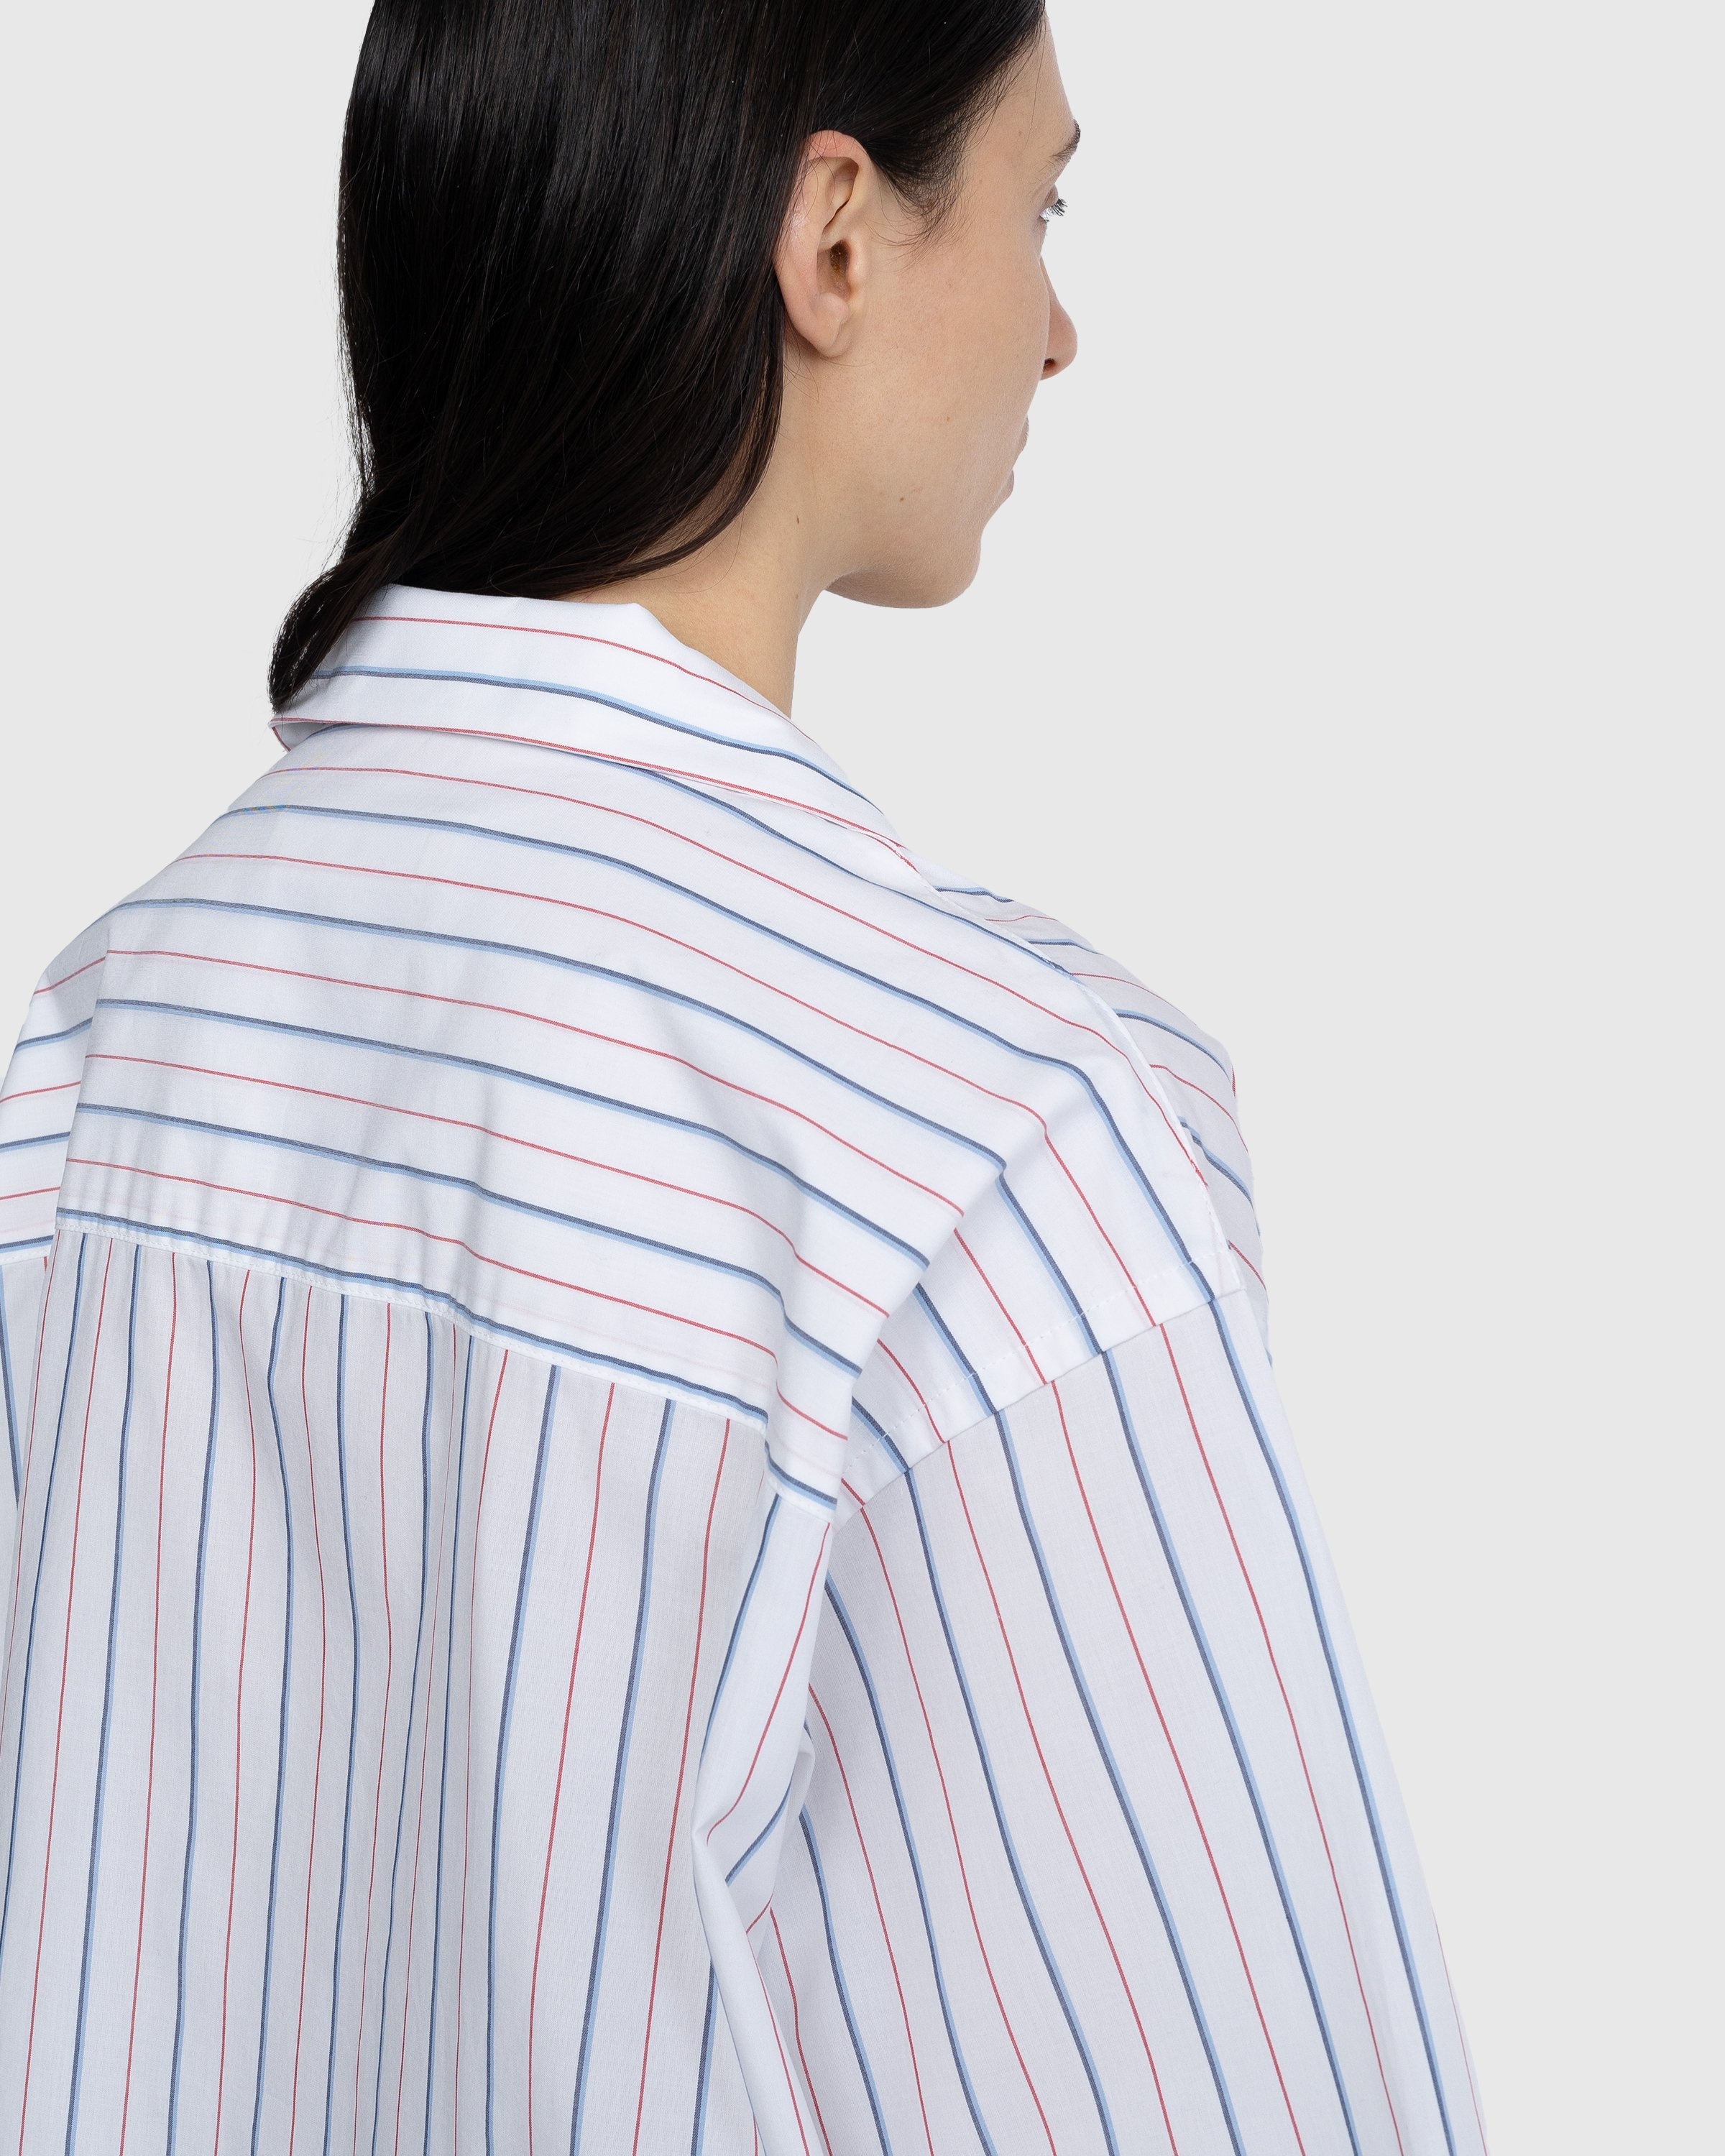 Marni – Striped Button-Up Shirt White - Shirts - White - Image 5